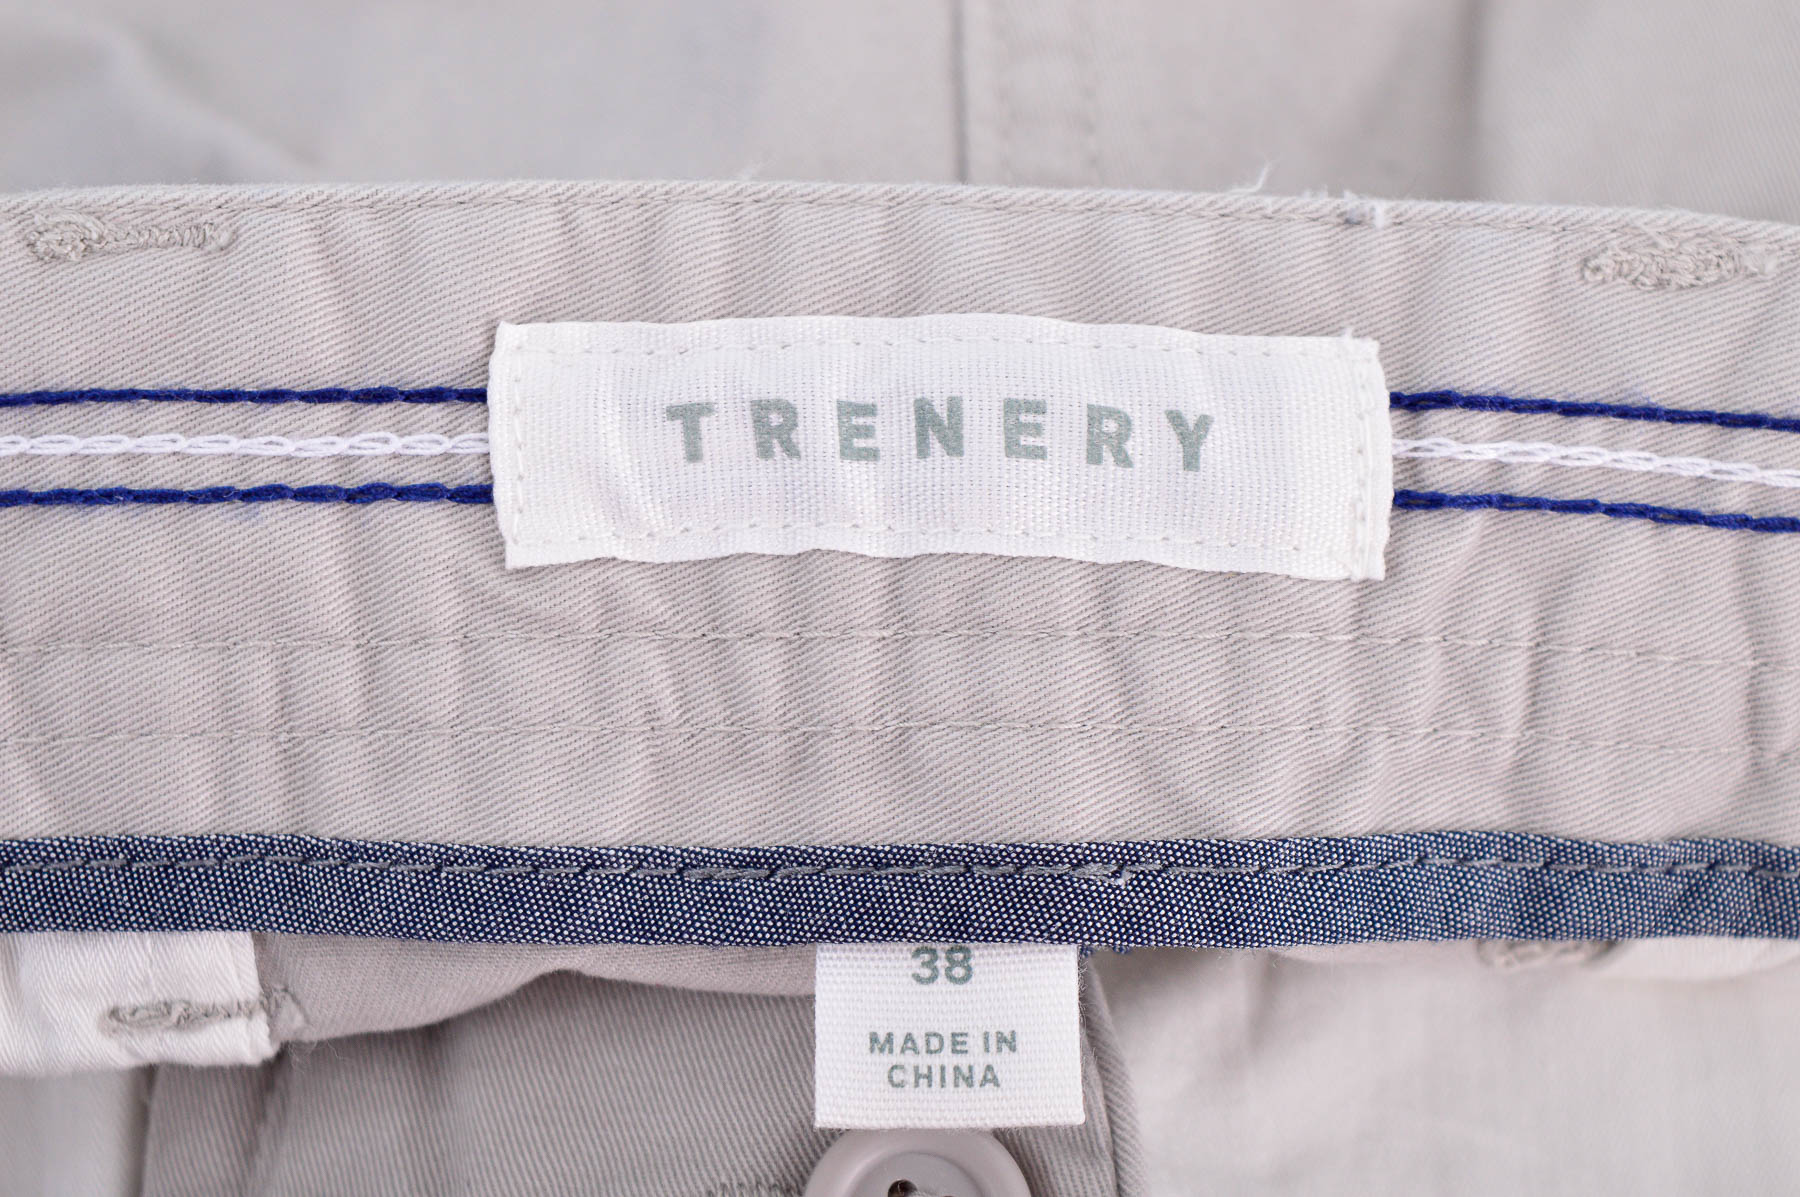 Men's shorts - TRENERY - 2